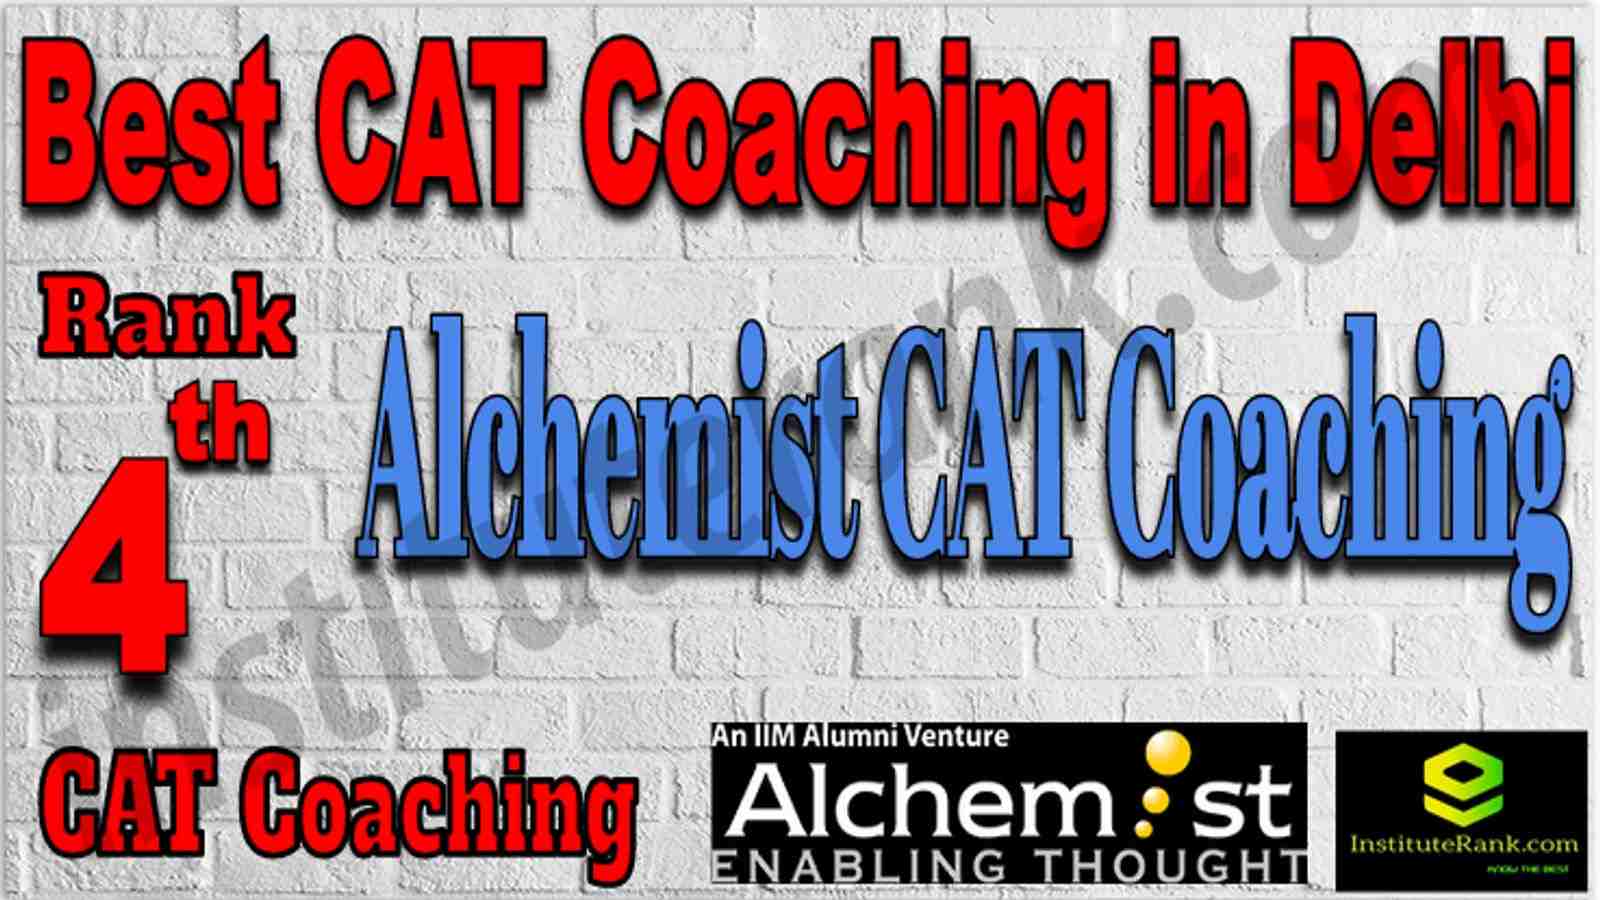 Rank 4th CAT Coaching in Delhi. Alchemist CAT Coaching in Delhi. Rank 4 Best CAT Coaching in Delhi Alchemist. Alchemist Best CAT Coaching in Delhi. 4th Best CAT Coaching in Delhi Alchemist. Alchemist Best CAT Coaching Institute in Delhi